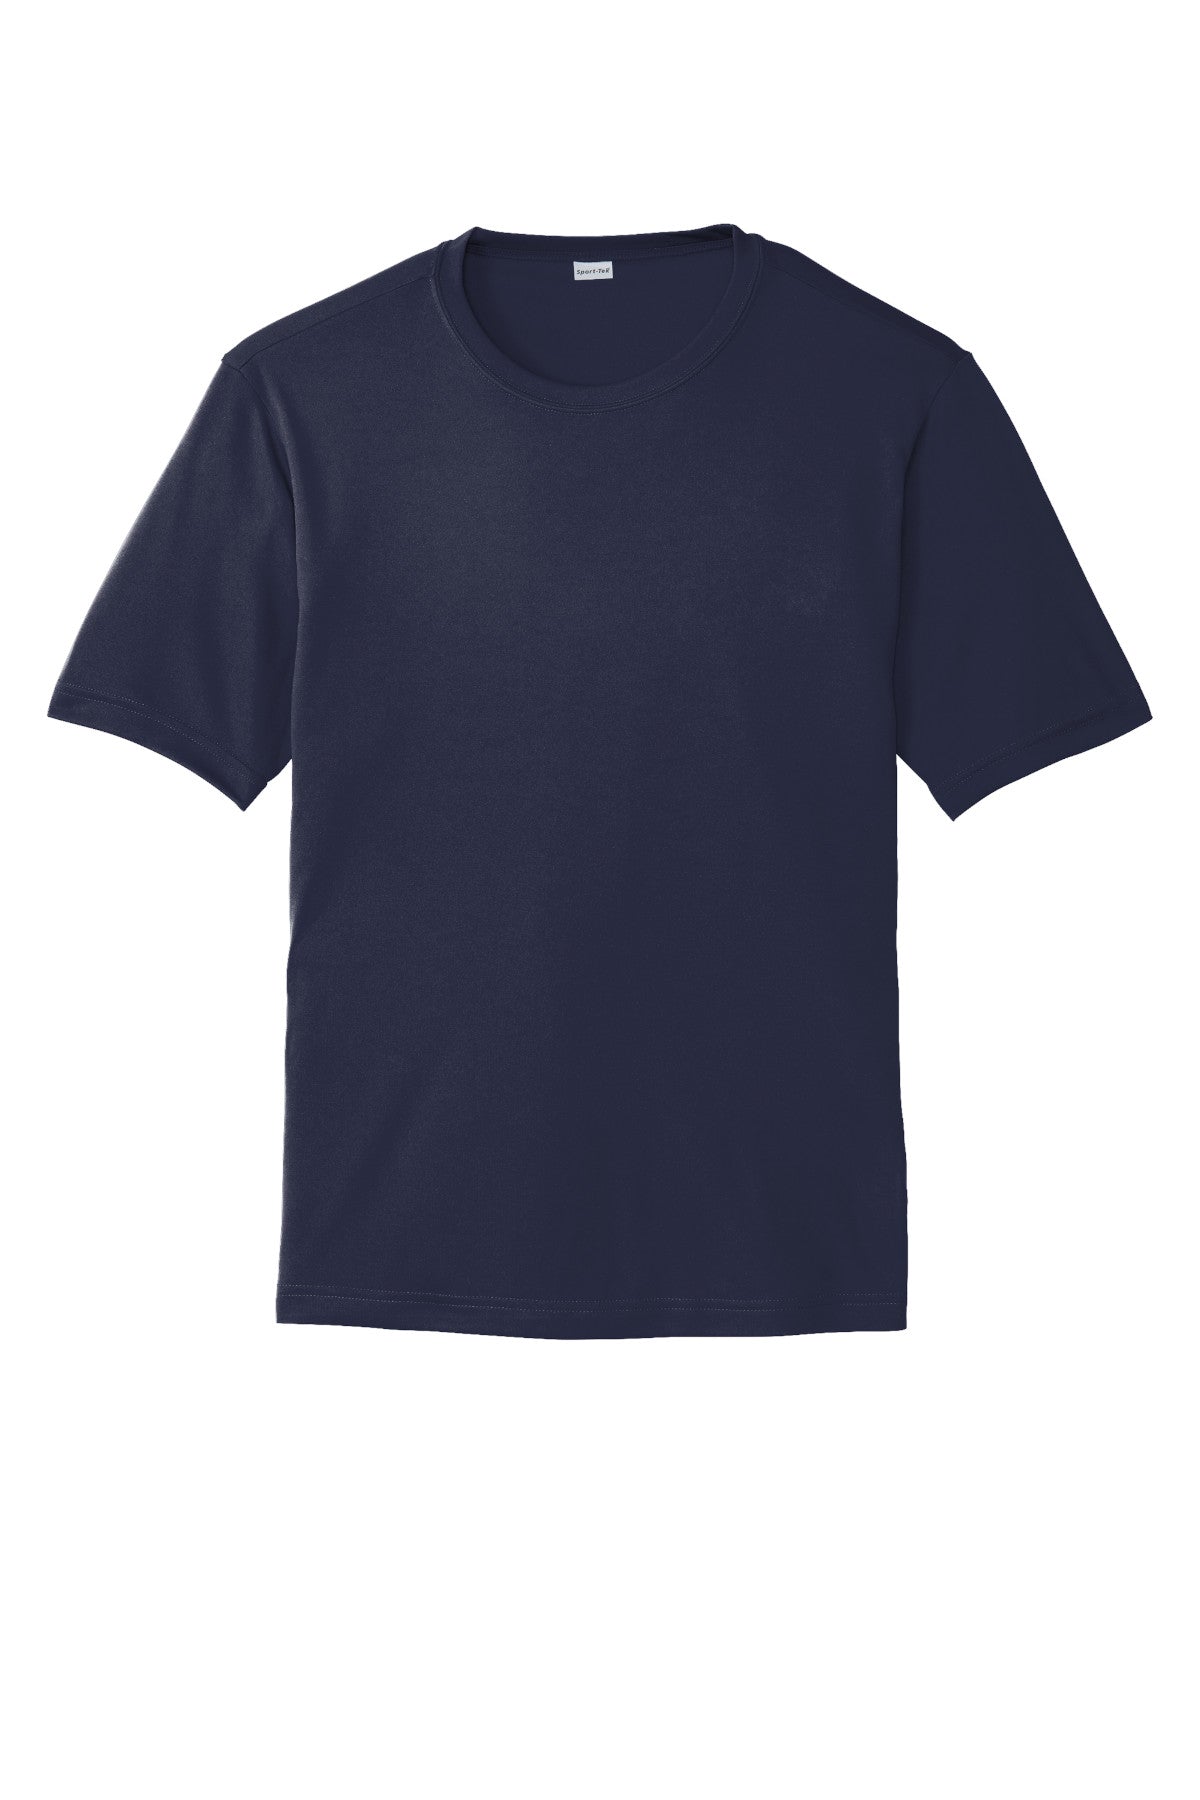 Sport-Tek St350 Polyester Adult T-Shirt Ad Small / True Navy